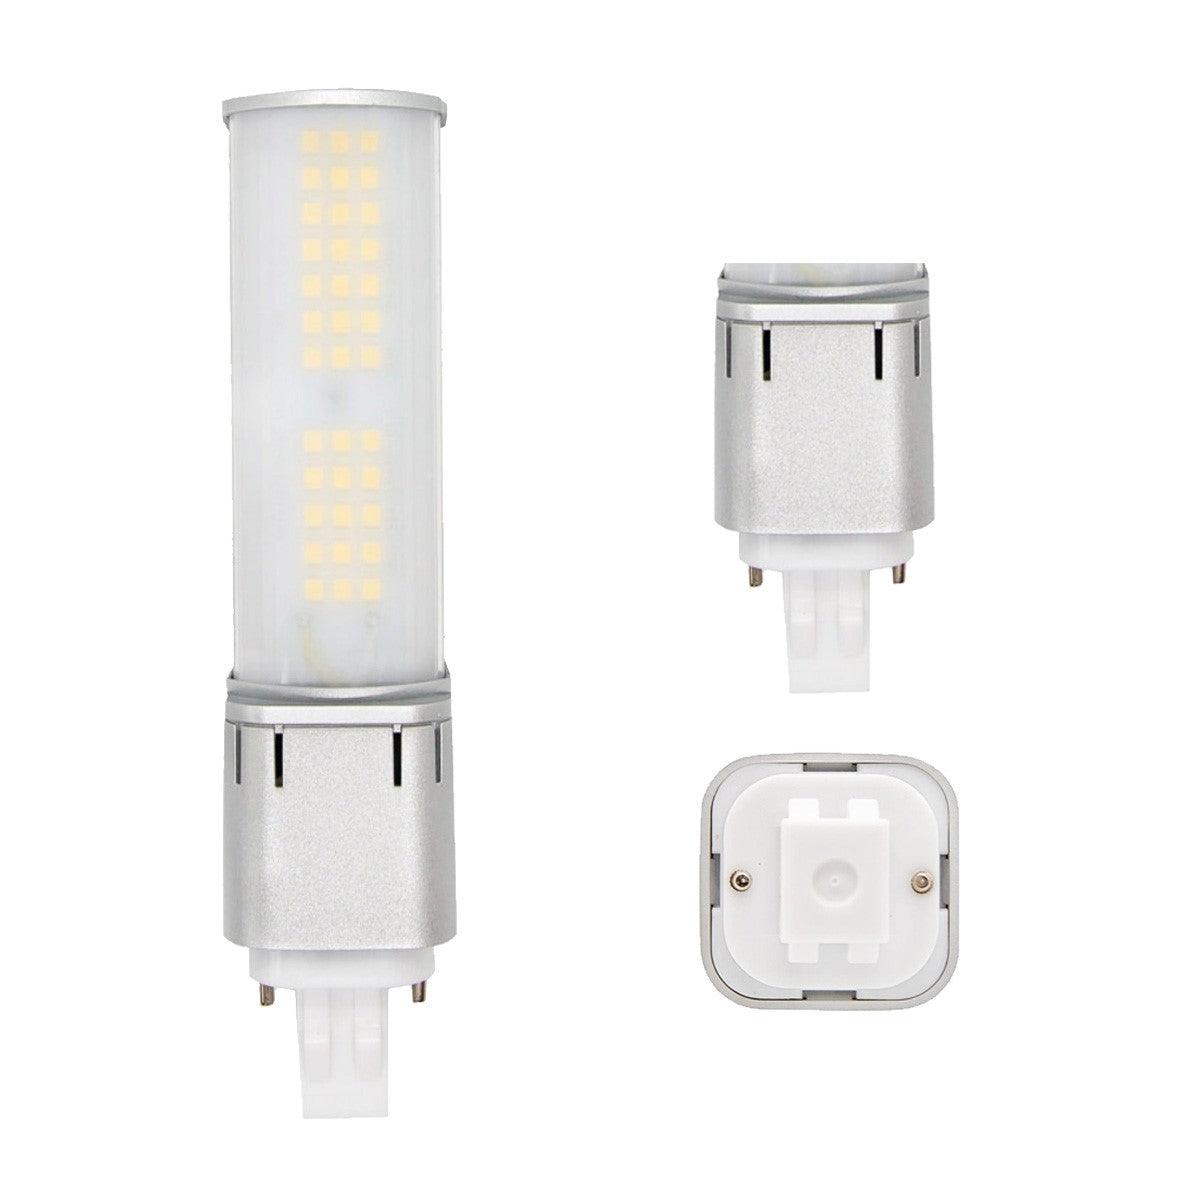 2 pin PL LED Bulb, 7 Watt 910 Lumens, 5000K, Horizontal, Replaces 13W CFL, GX23 Base-2, Direct Or Bypass